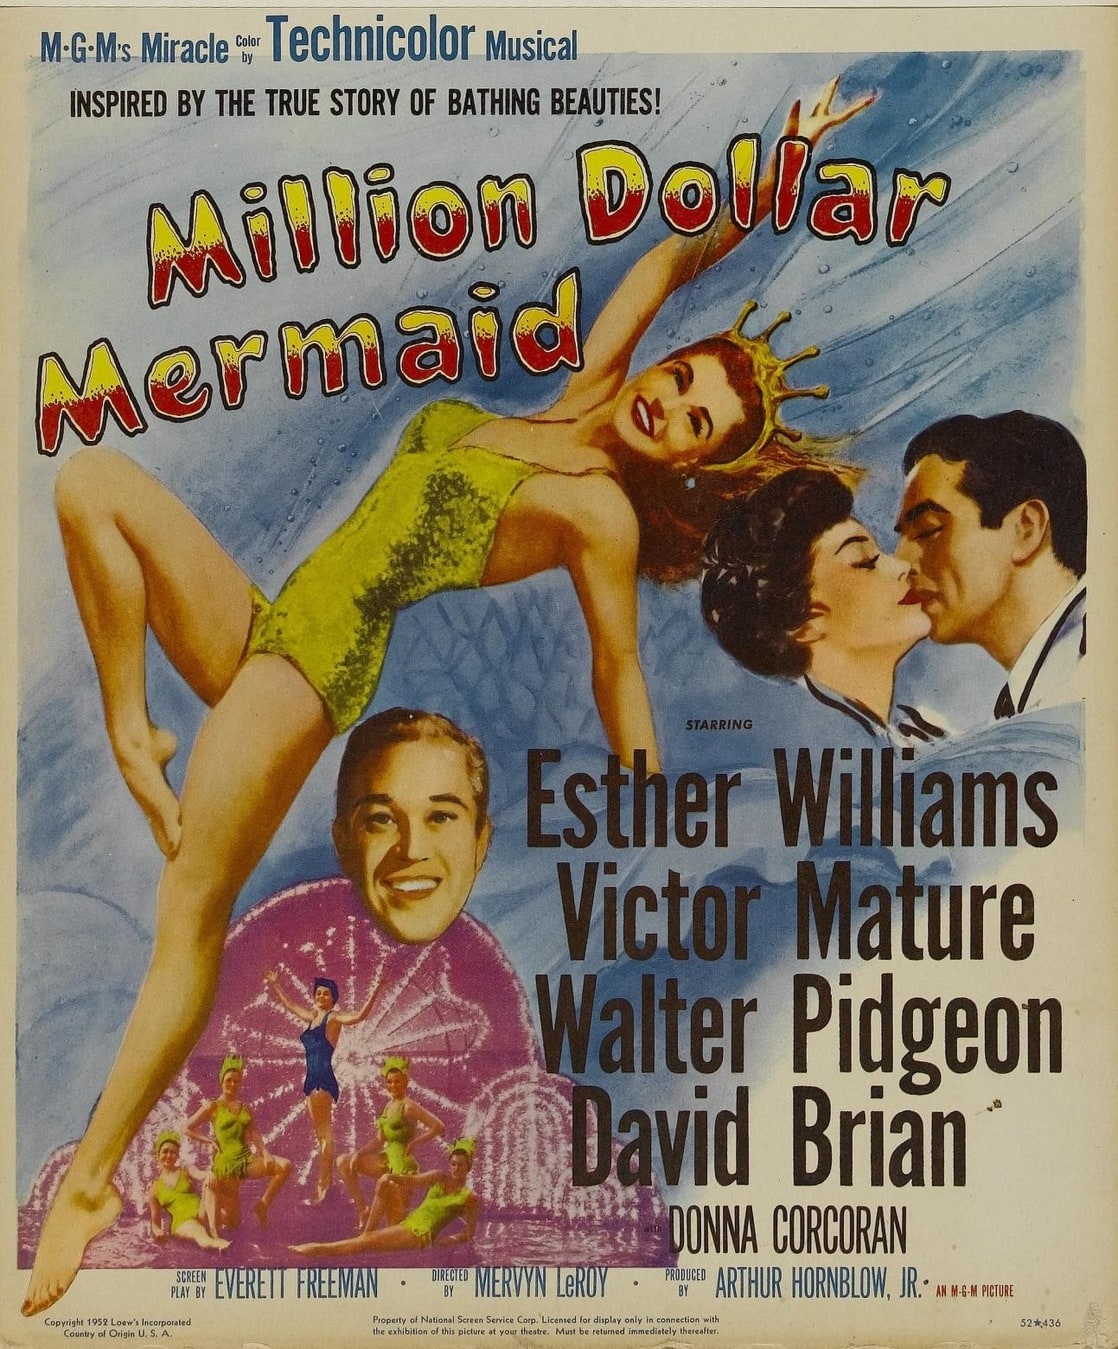 The Original Million Dollar Mermaid by Emily Gibson